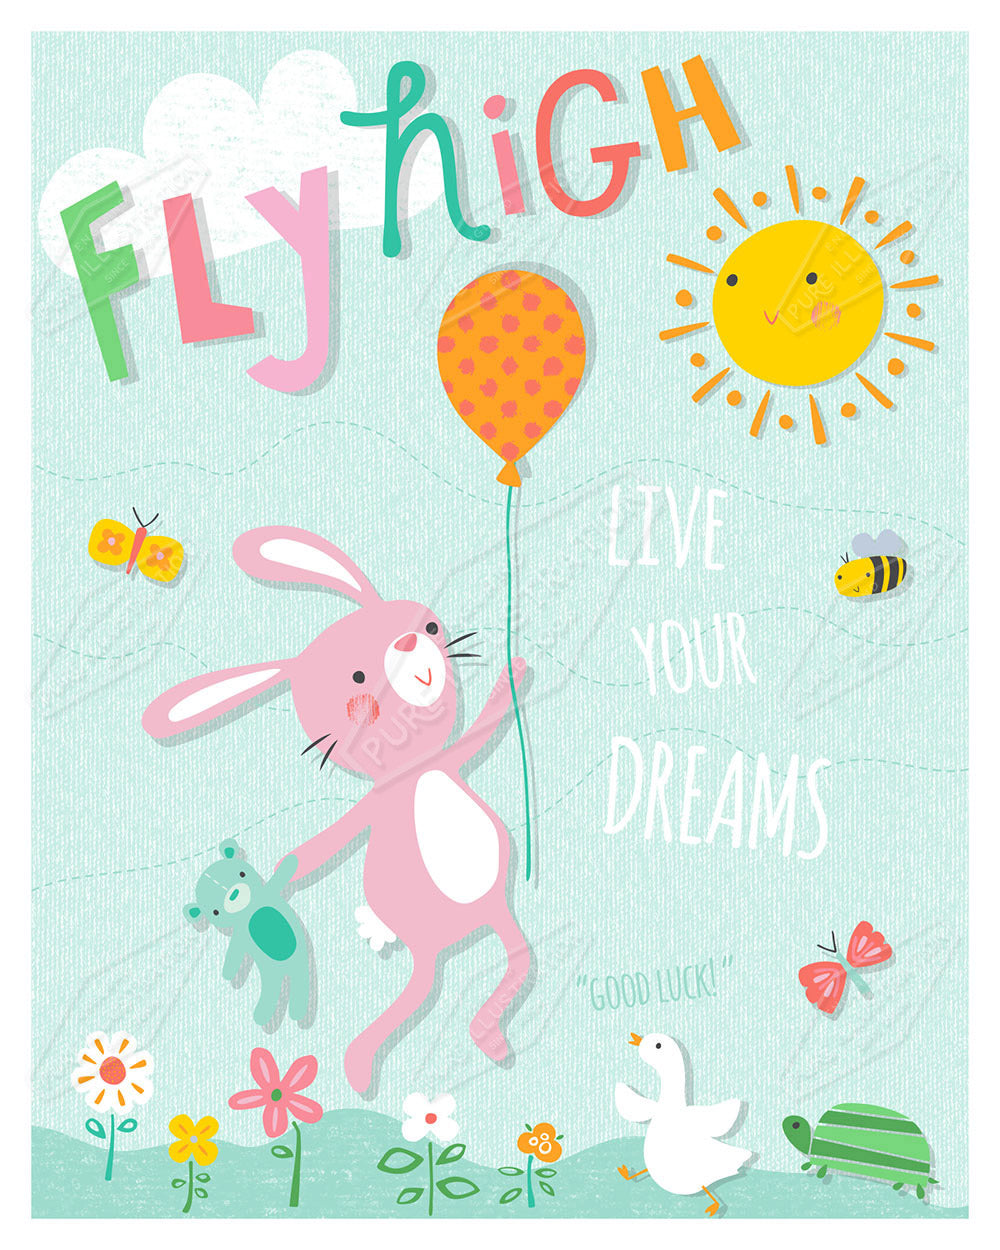 Good Luck Children's Design by Gill Eggleston for Pure Art Licensing Agency & Surface Design Studio